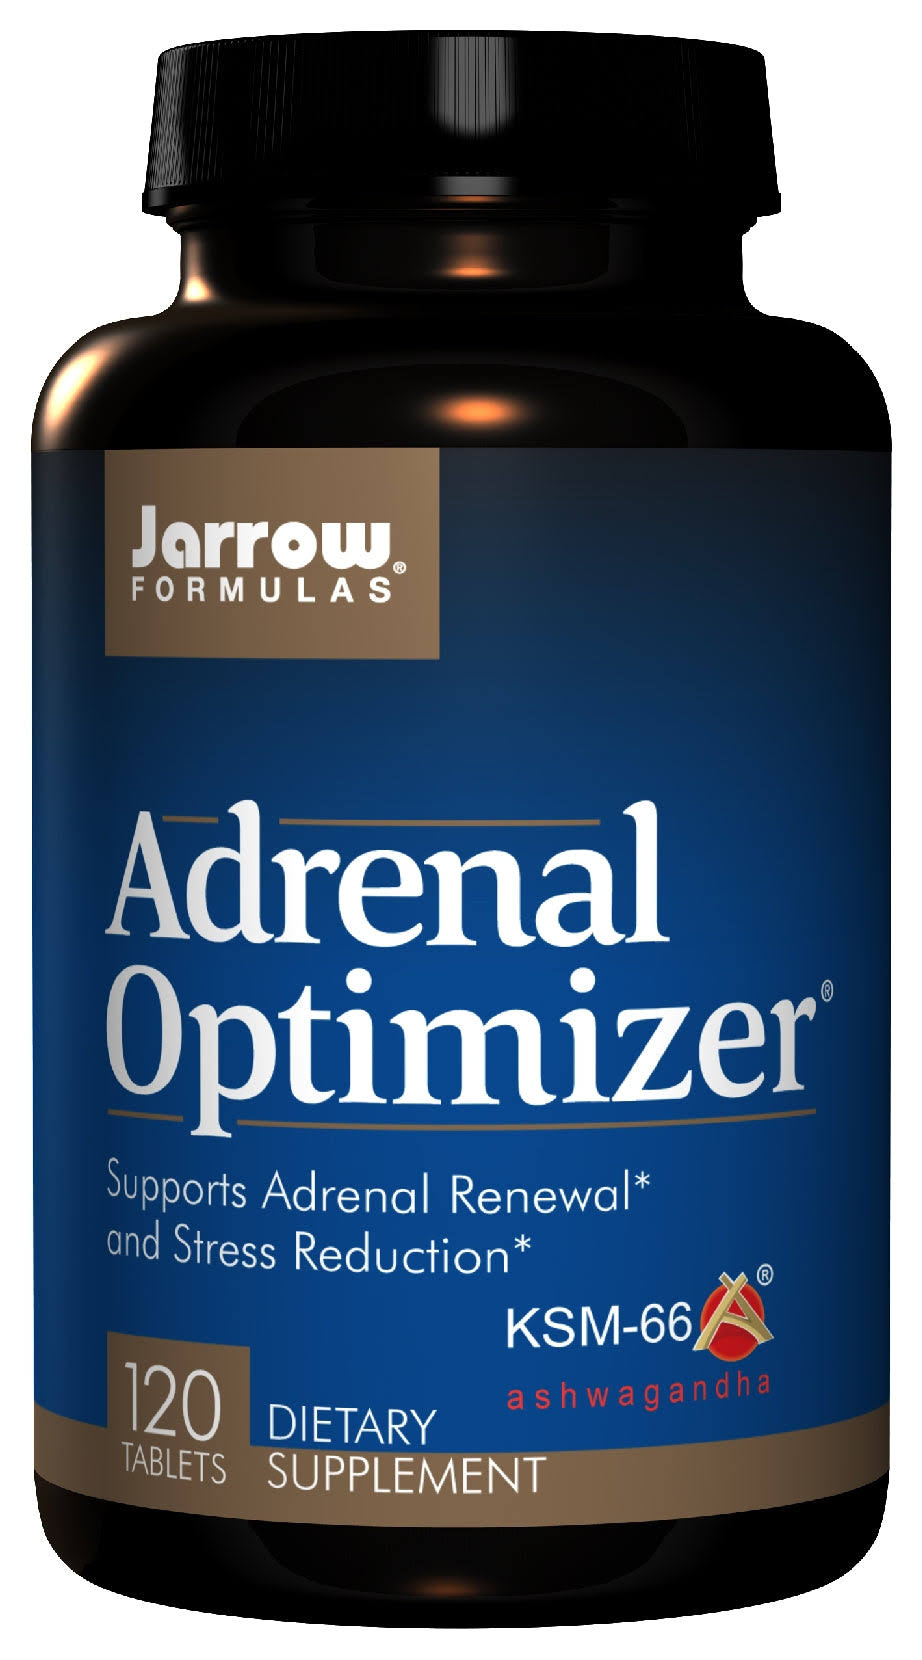 Jarrow Formulas Adrenal Optimizer Dietary Supplement - 120 Tablets